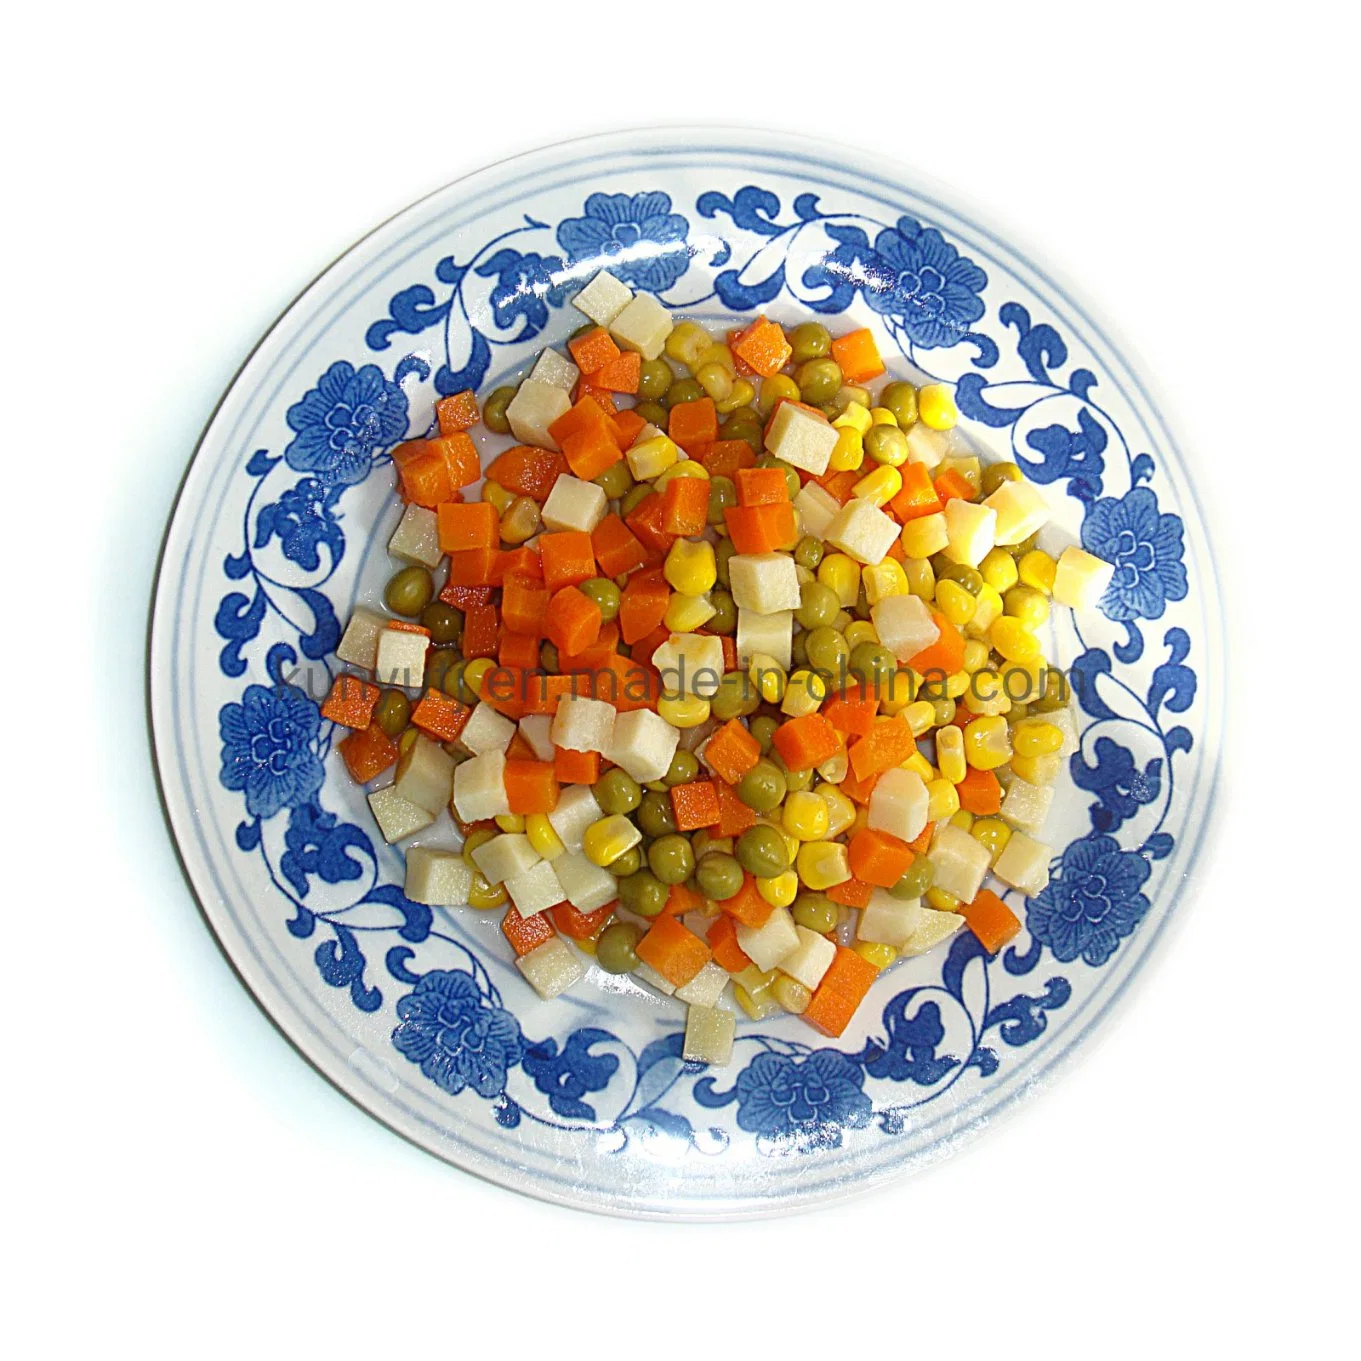 Neu Crop Fresh Mixed Vegetables Konserven Mischgemüse zum Verkauf